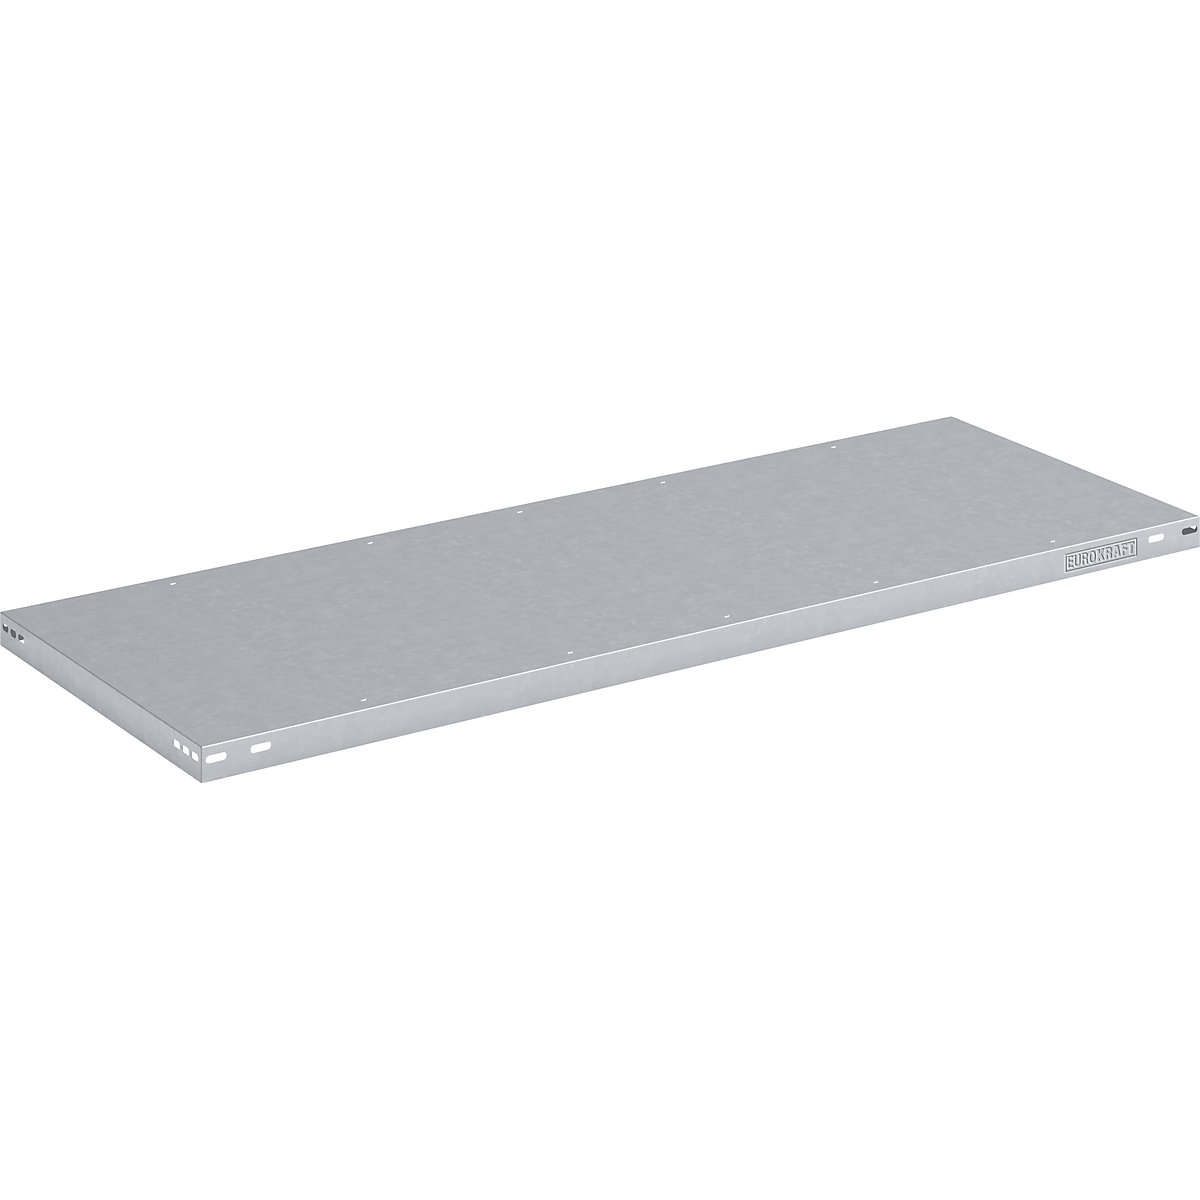 Zinc plated shelf – eurokraft pro, medium duty, WxD 1300 x 600 mm